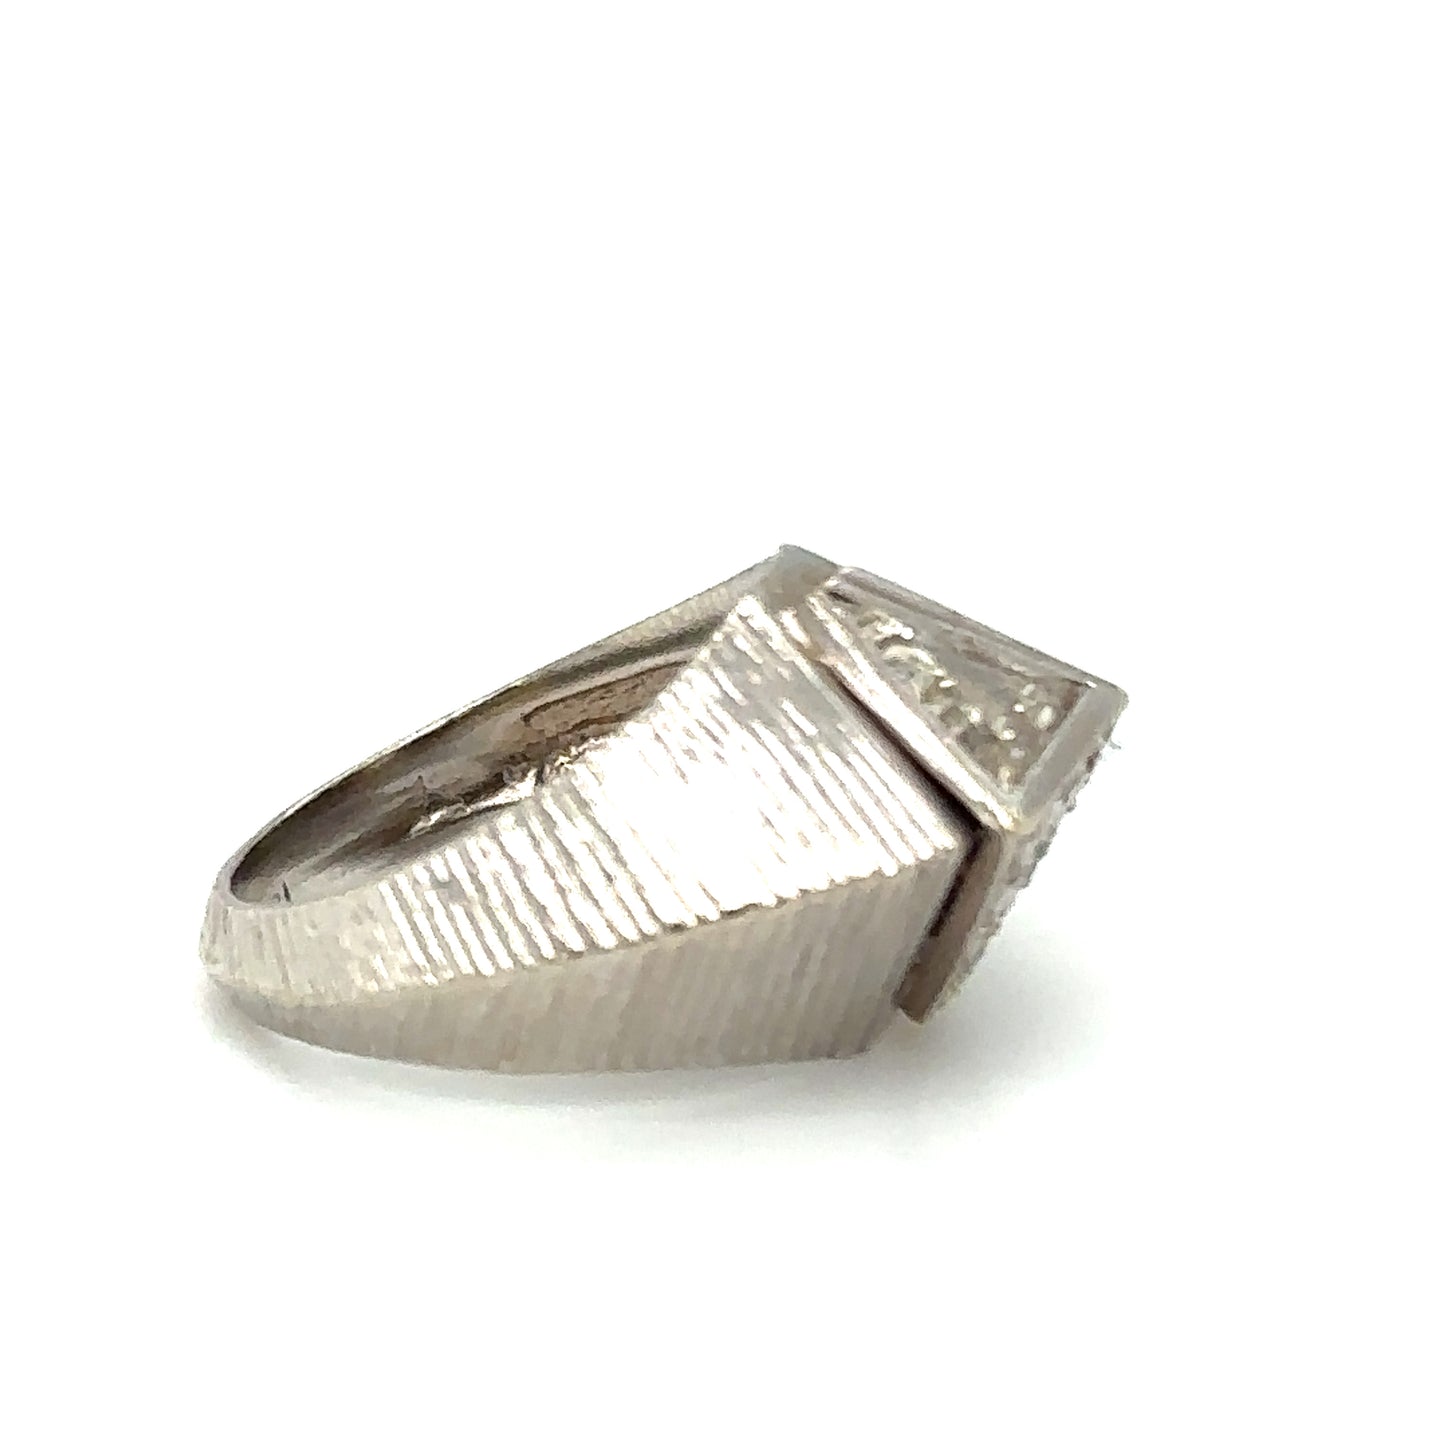 Retro 1960s 1.50 Carat Diamond Geometric Ring in 14K White Gold